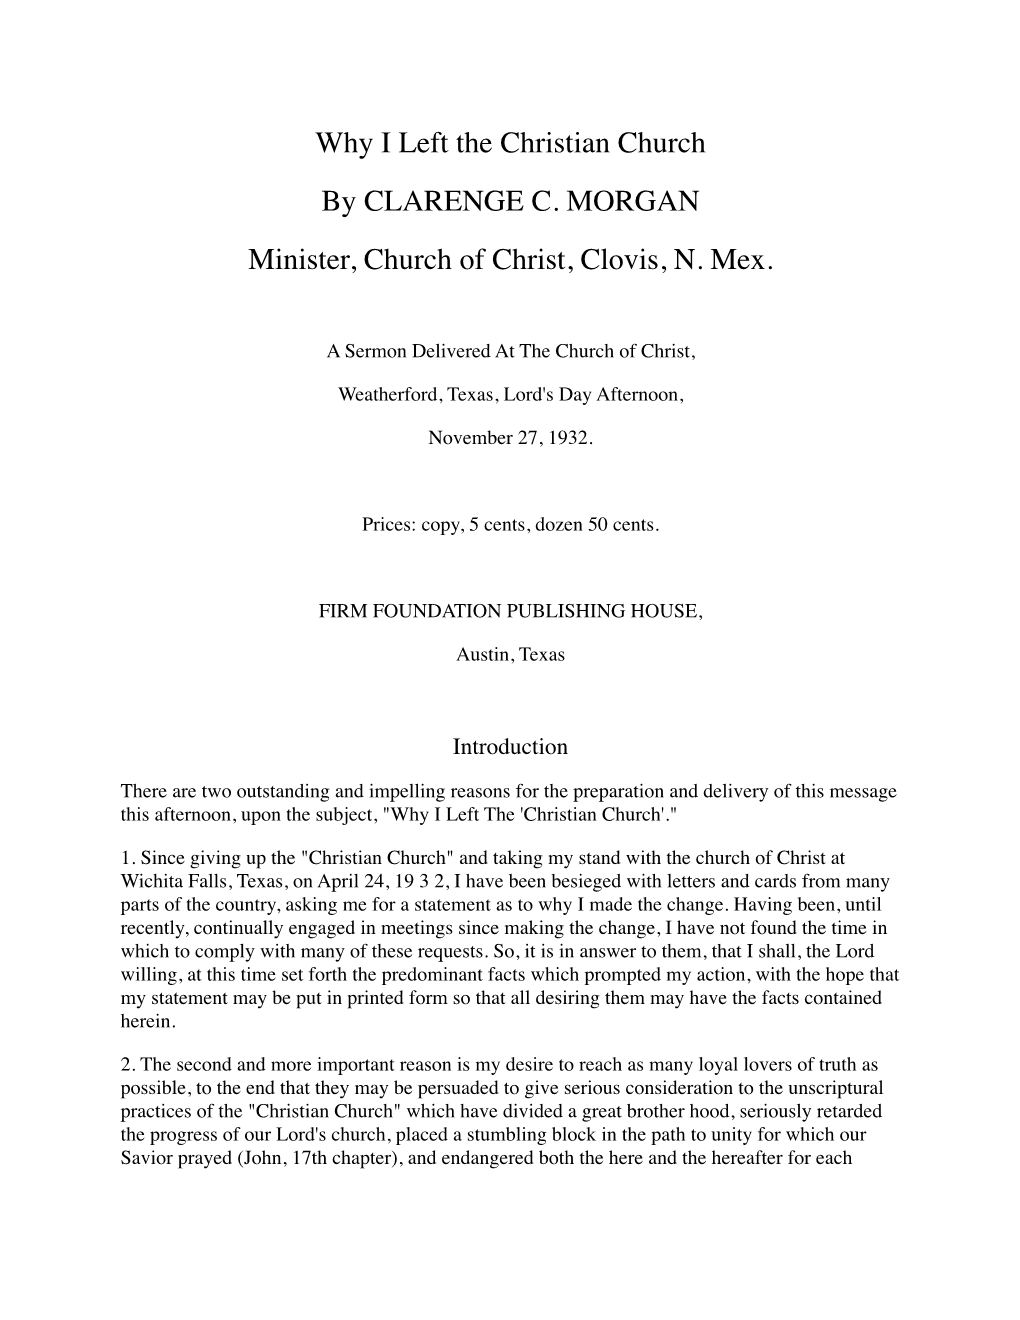 Why I Left the Christian Church by CLARENGE C. MORGAN Minister, Church of Christ, Clovis, N